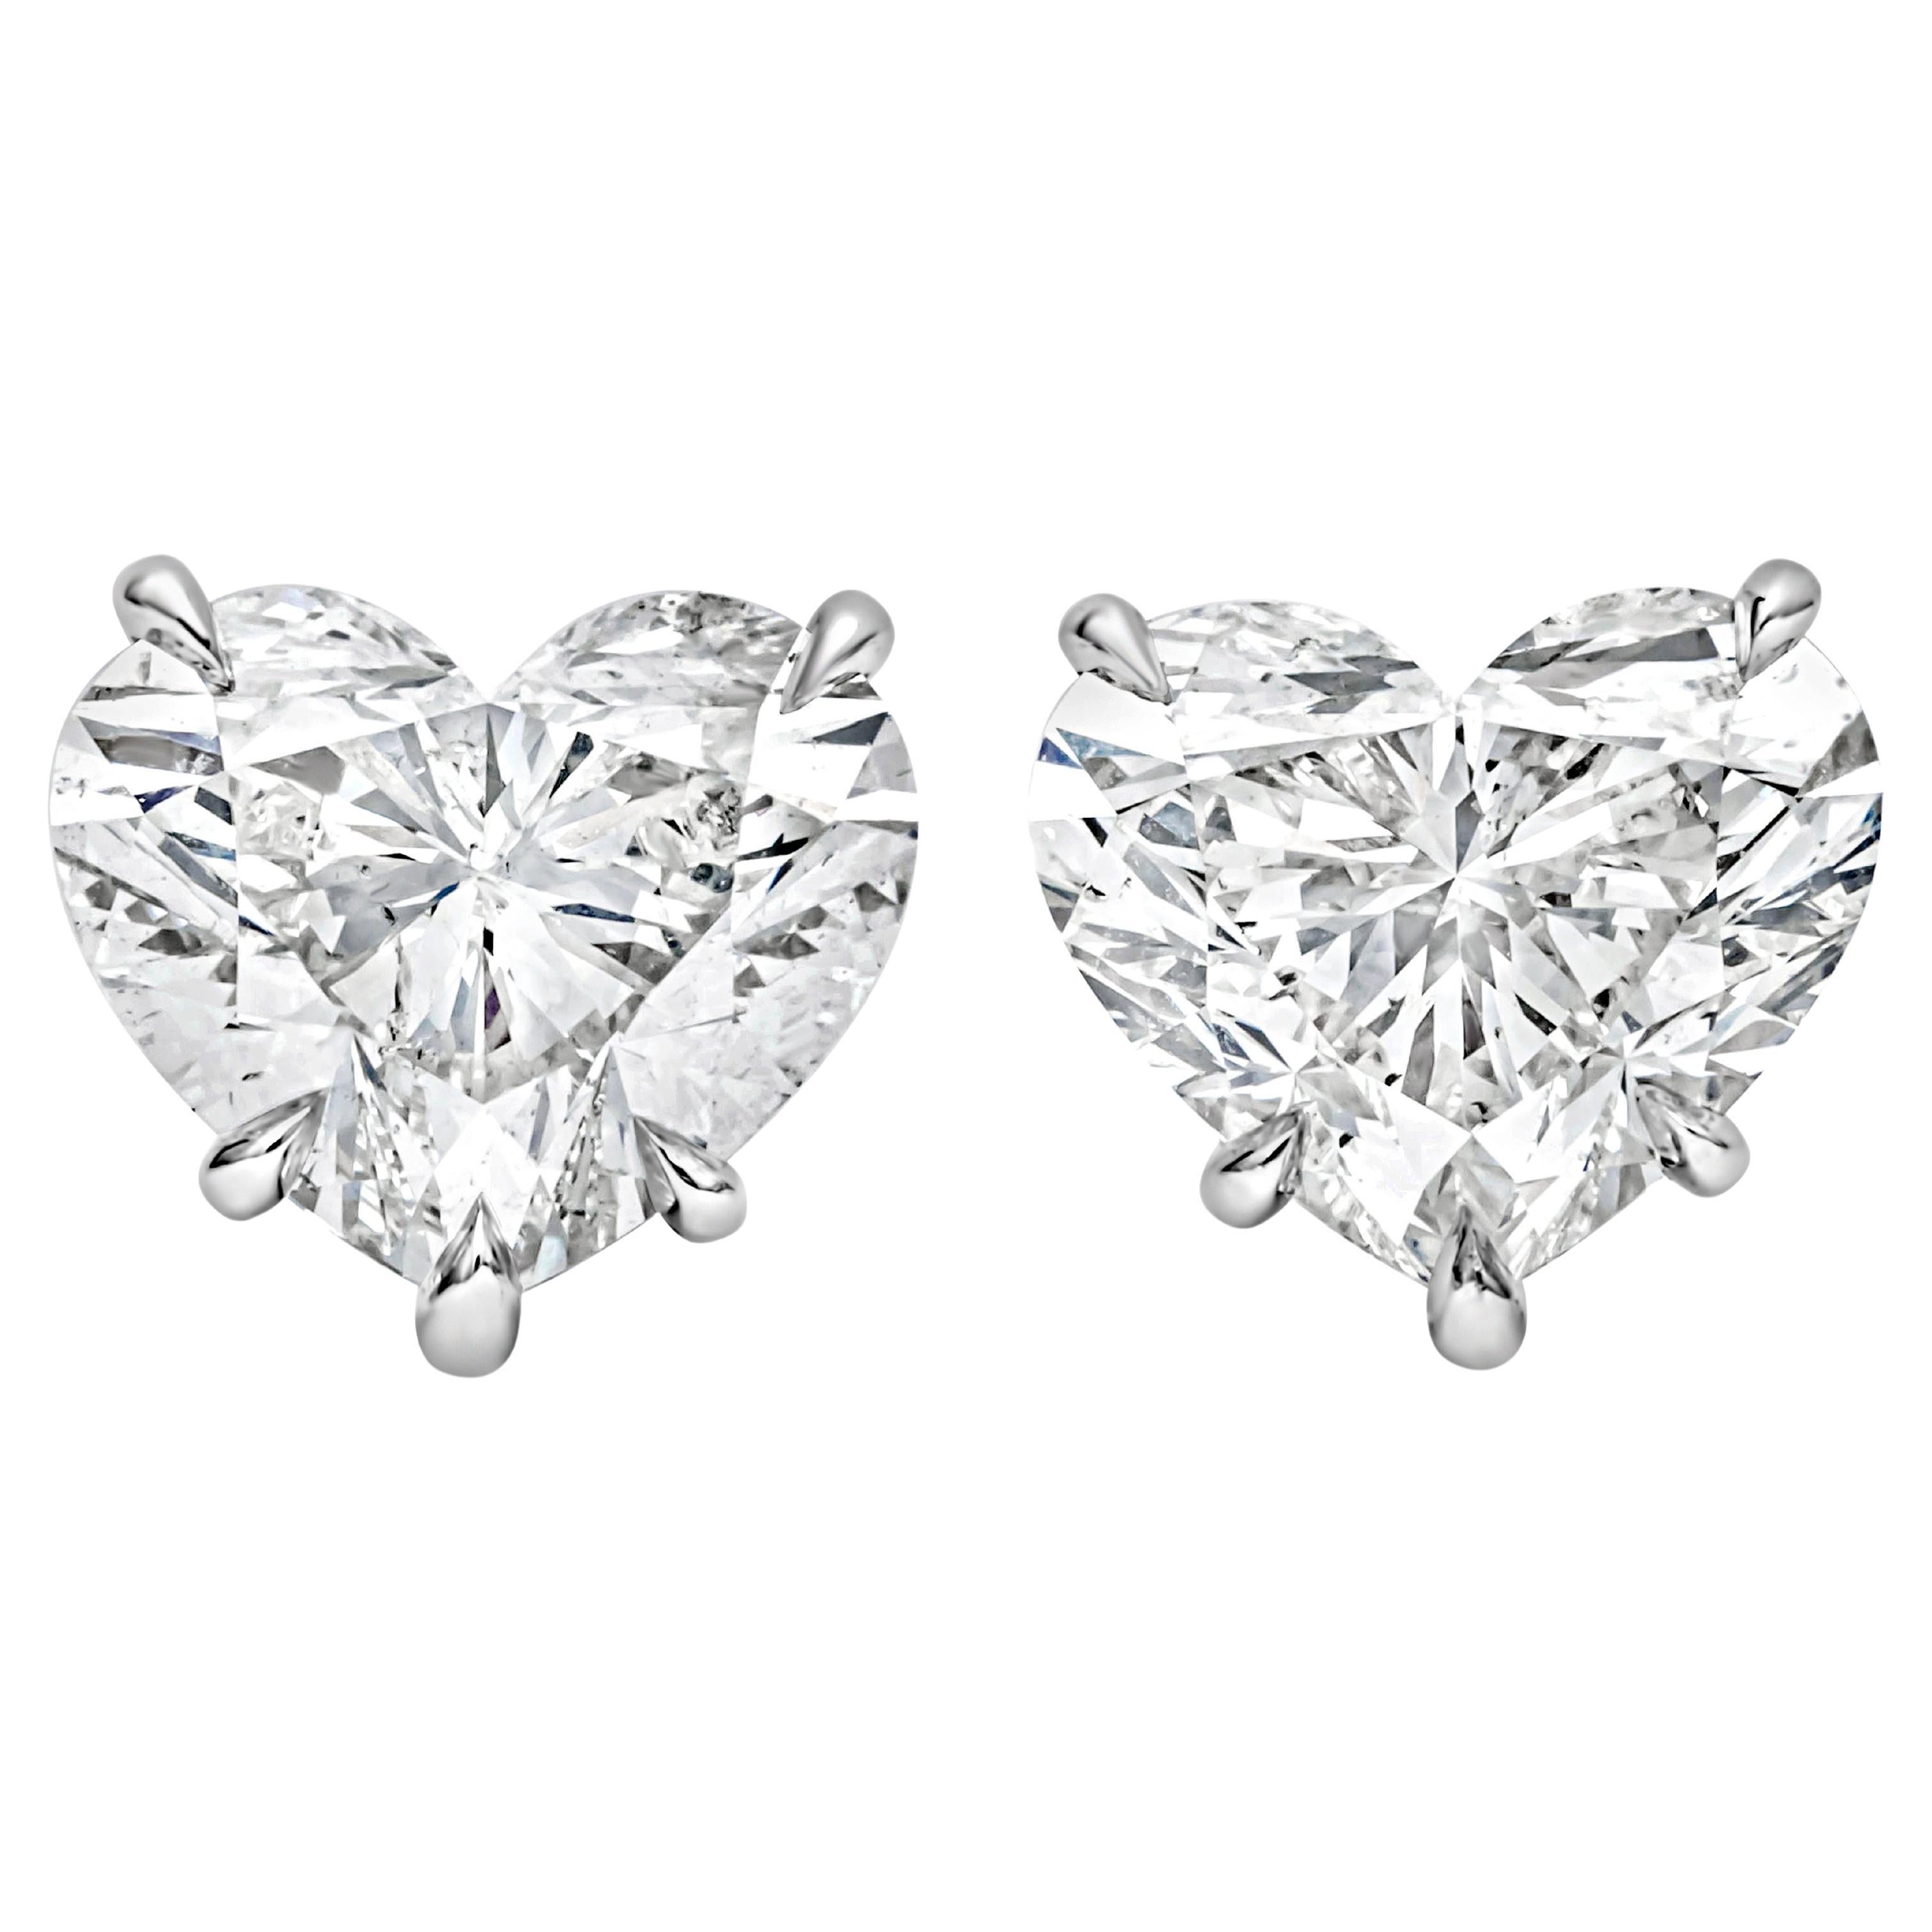 Roman Malakov GIA Certified 6.03 Carats Total Heart Shape Diamond Stud Earrings